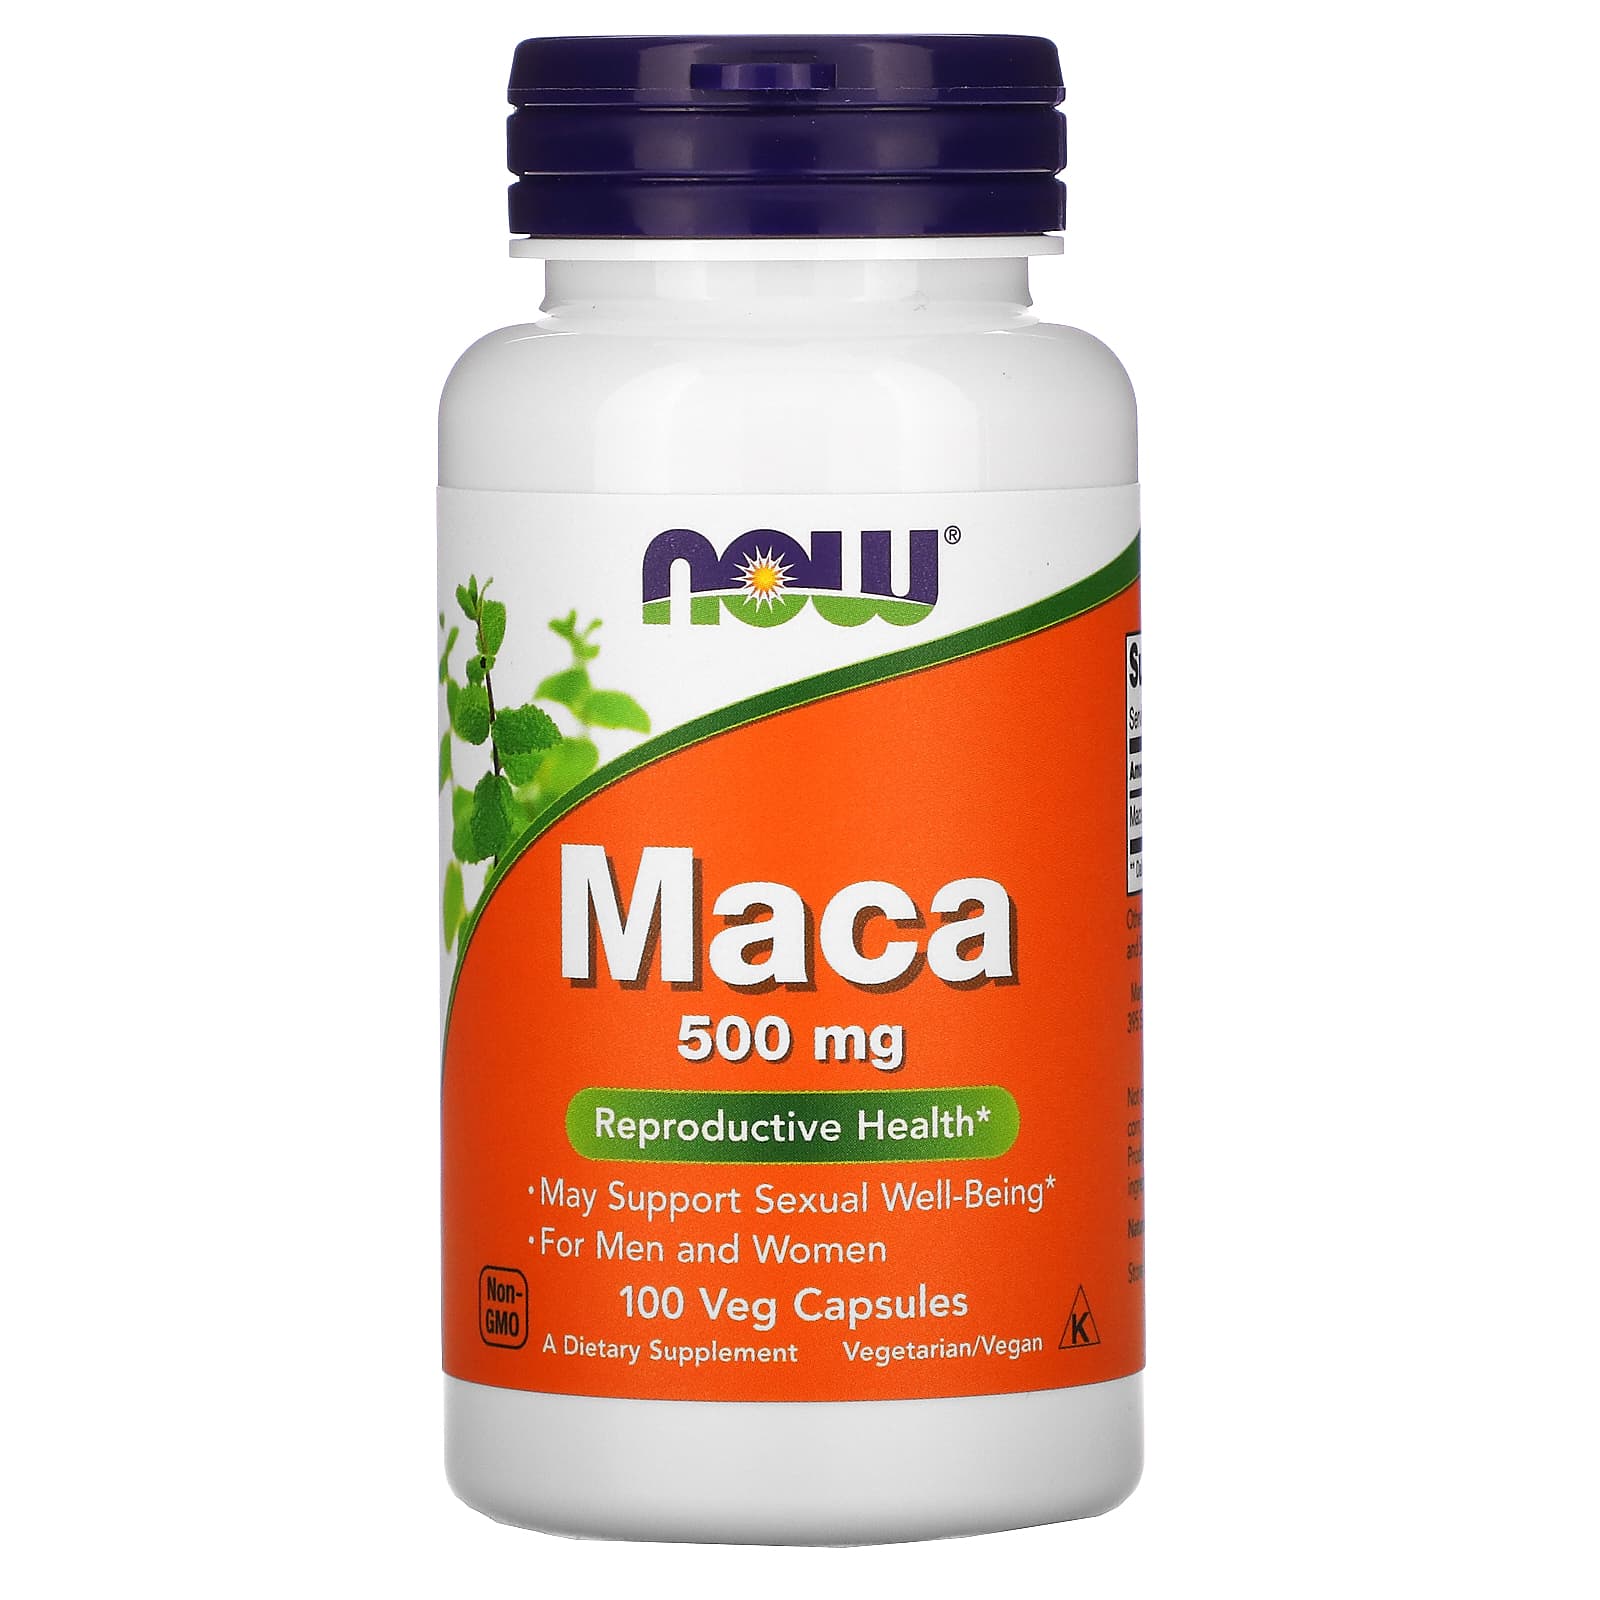 NOW Foods Maca 500 mg vegetarian dietary supplements - 100 Veg Capsules